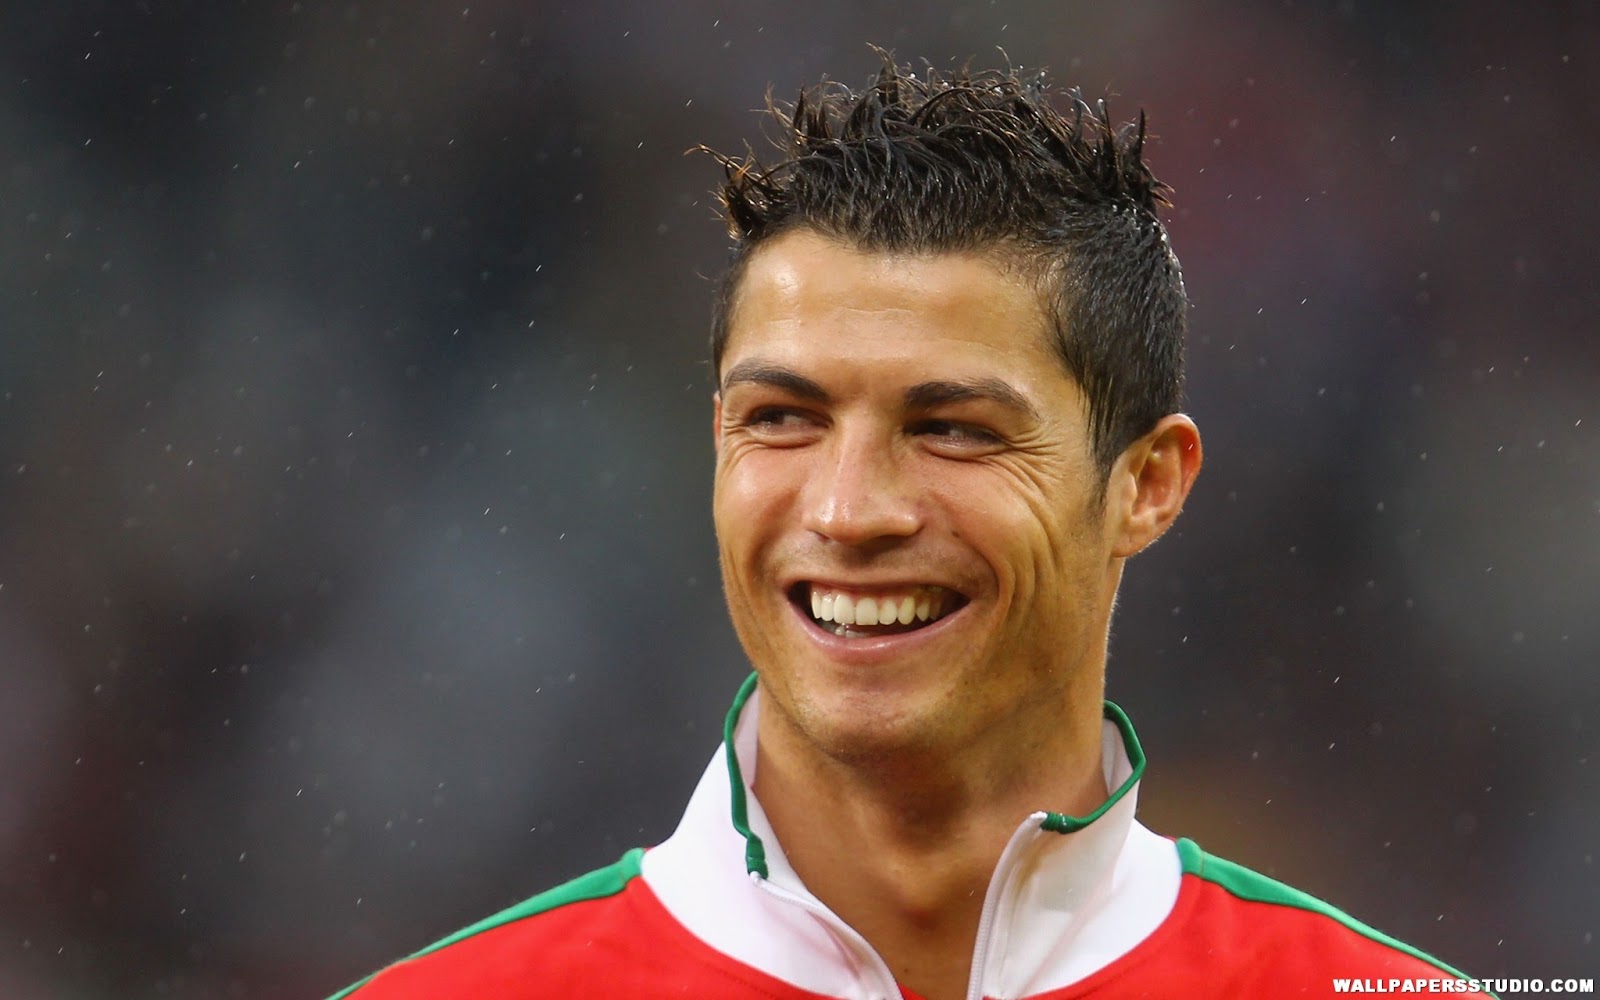 Cristiano Ronaldo hairstyle- Photo and image